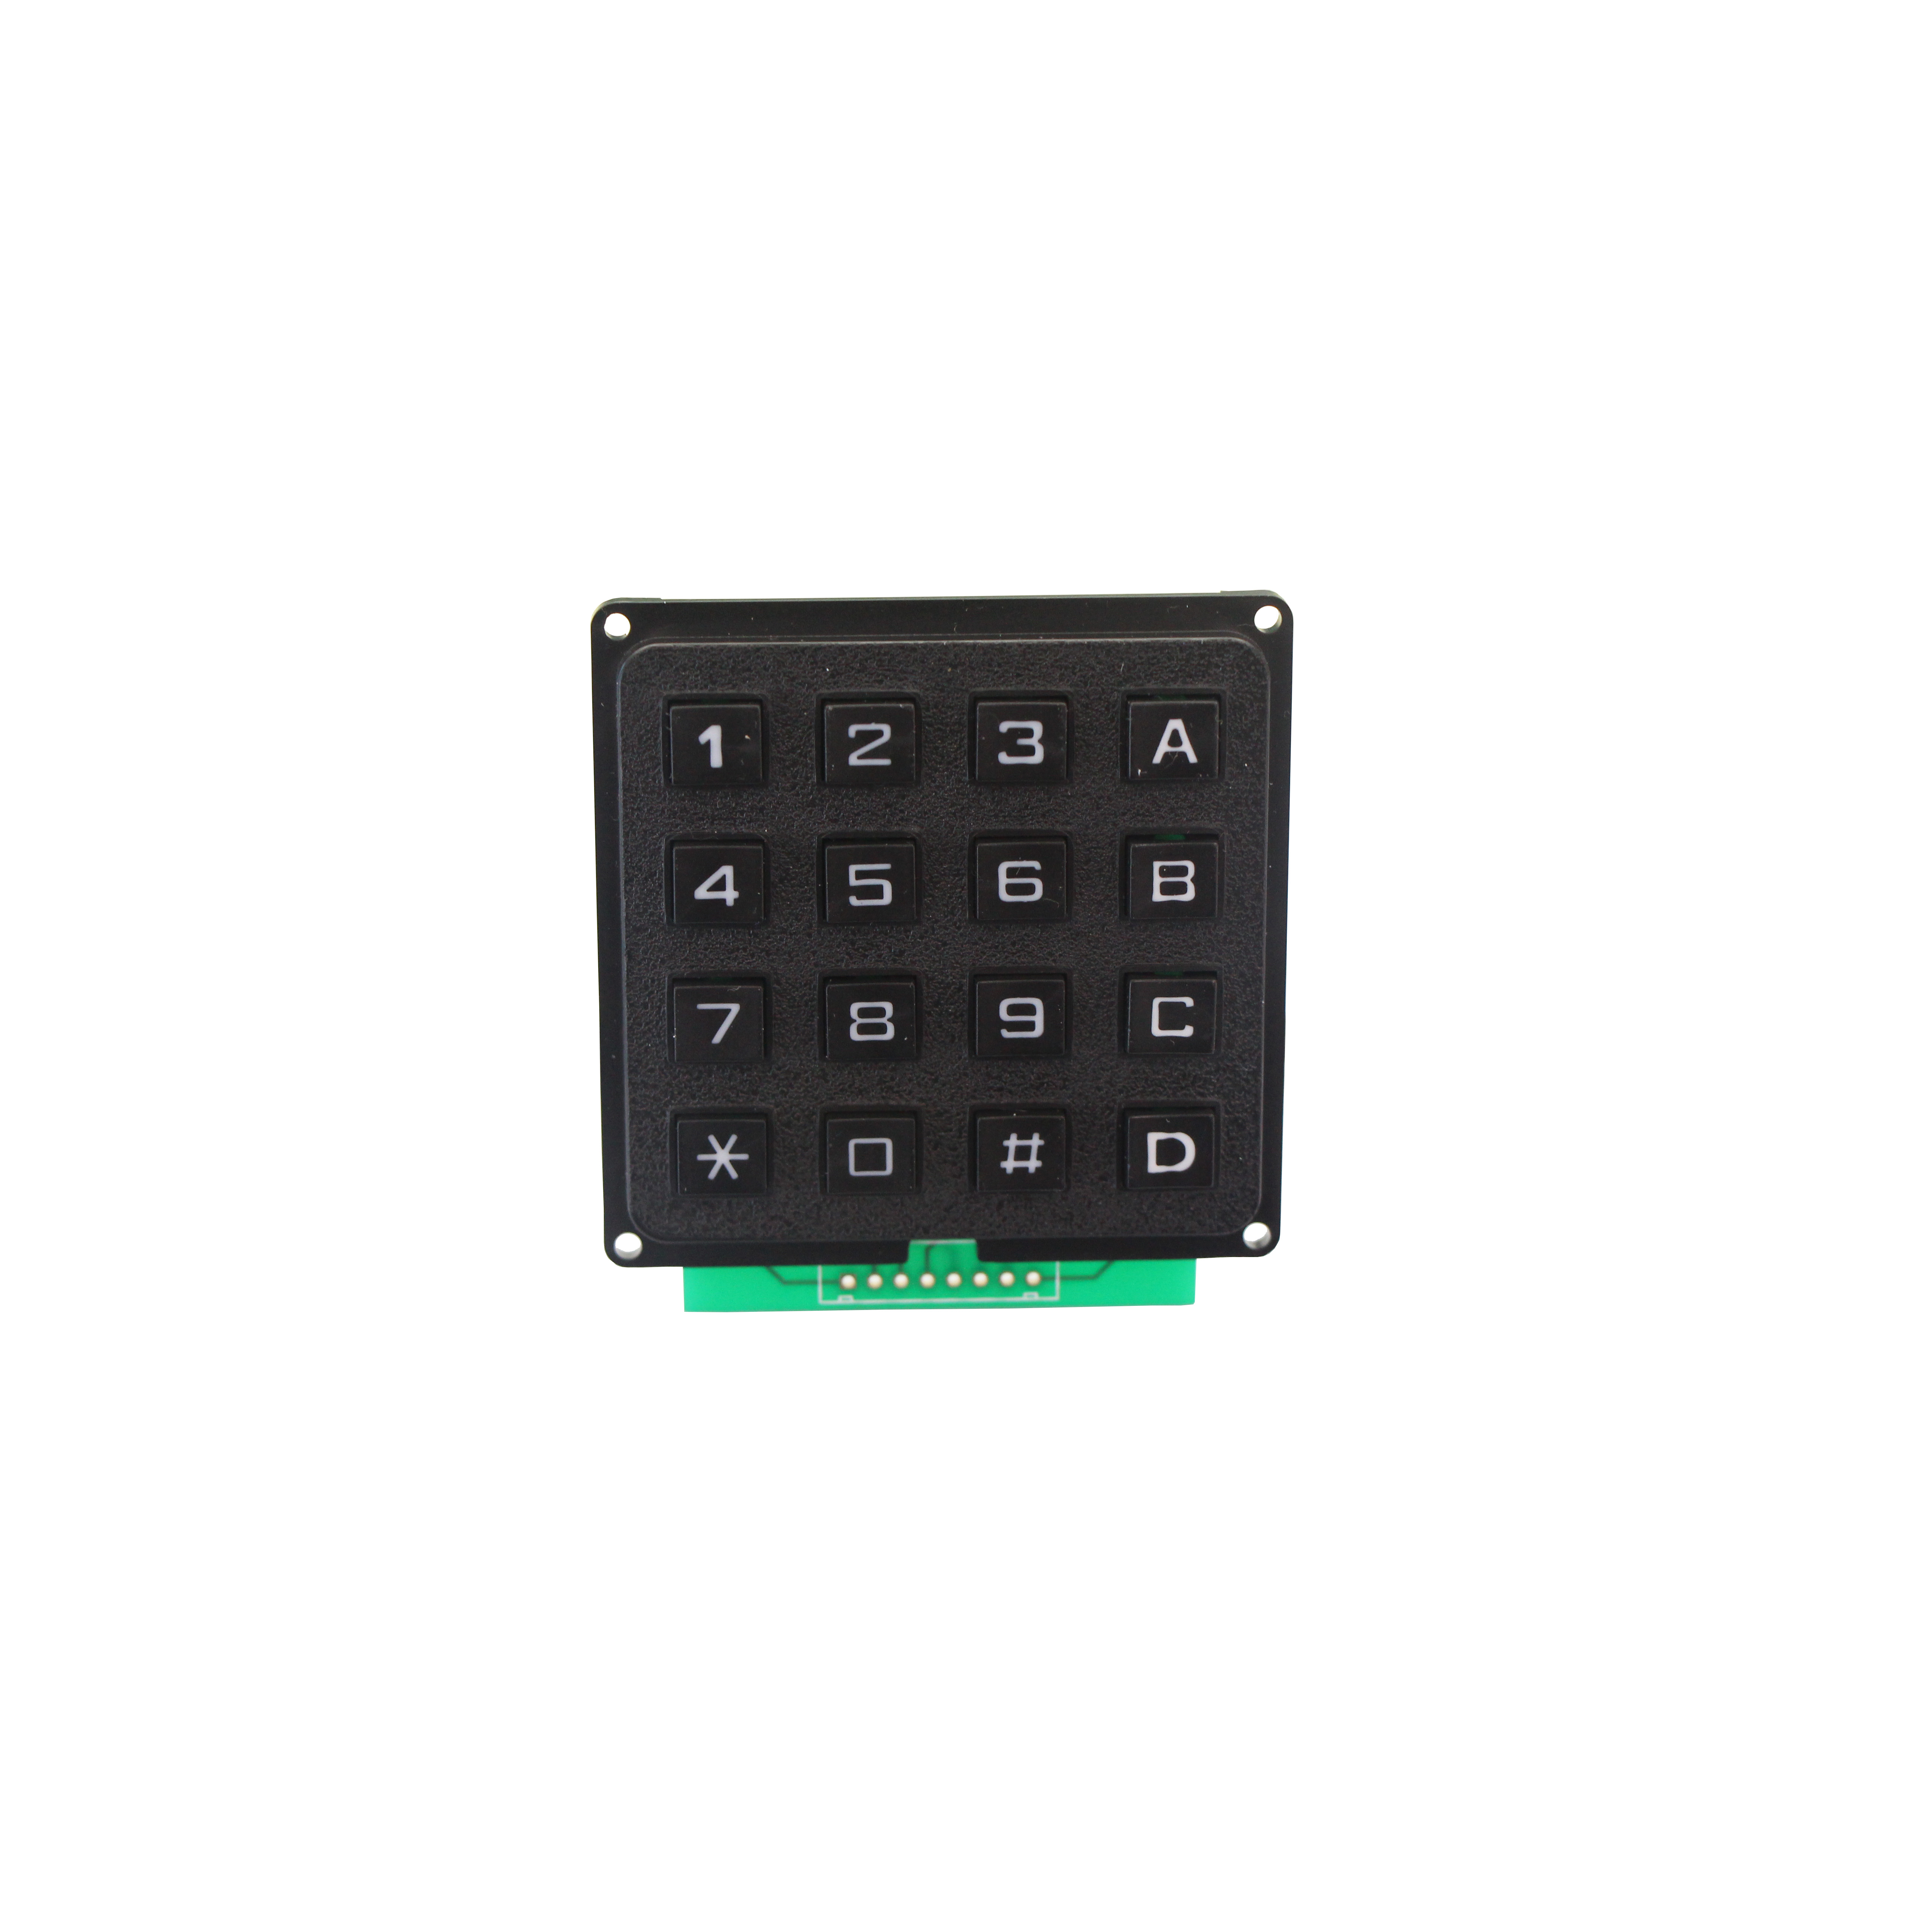 USB 4×4 numeric plastic vending machine keypad-B101 Featured Image